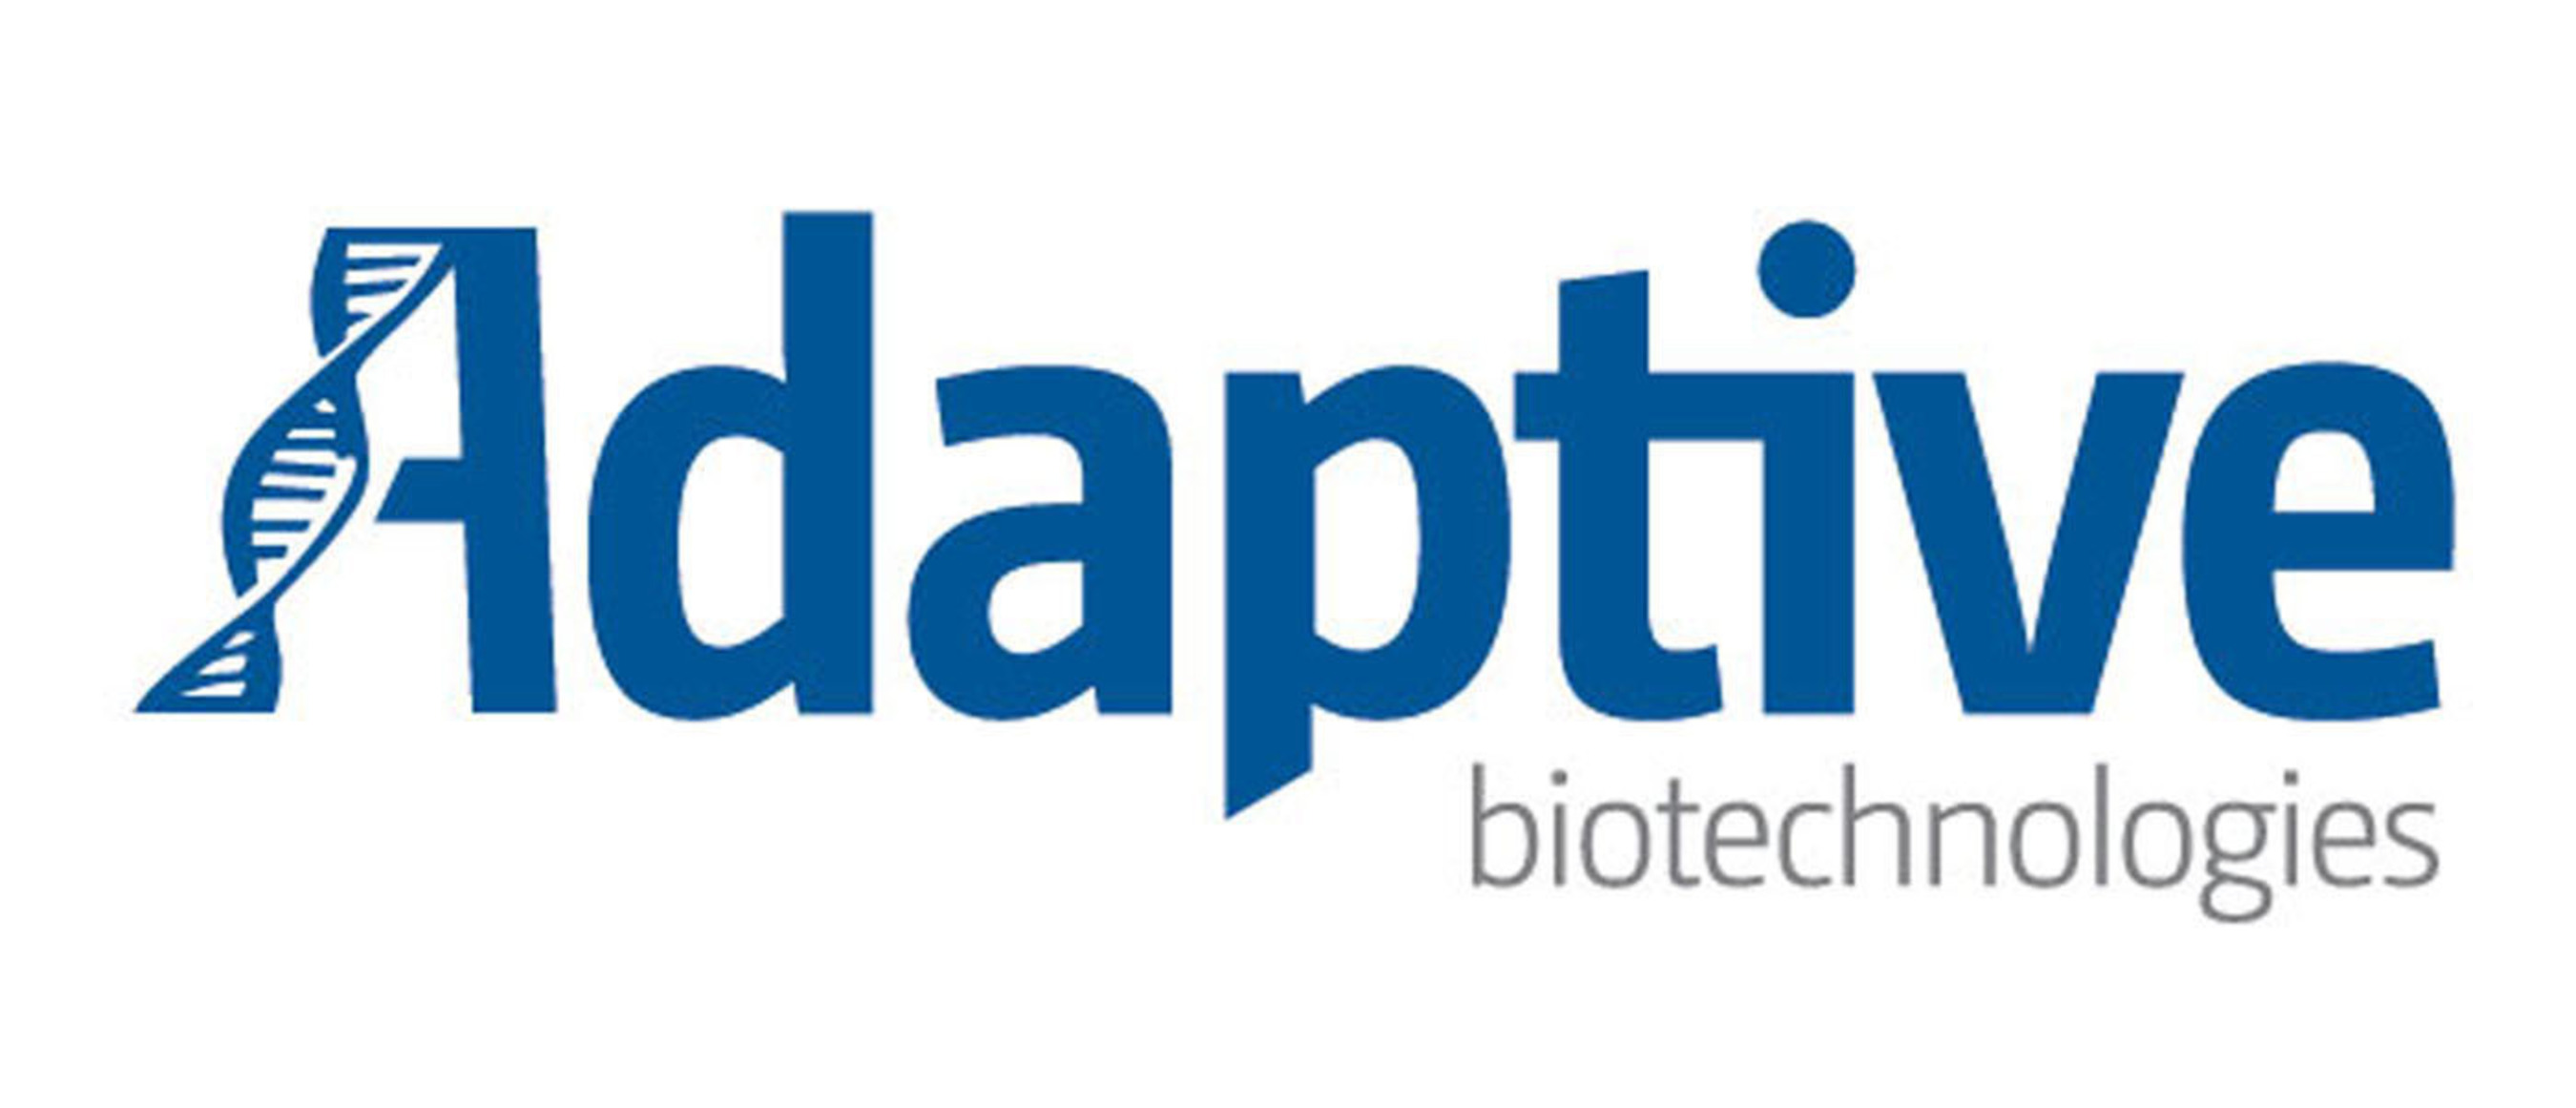 Adaptive Biotechnologies Logo. (PRNewsFoto/Adaptive Biotechnologies Corporation) (PRNewsFoto/)